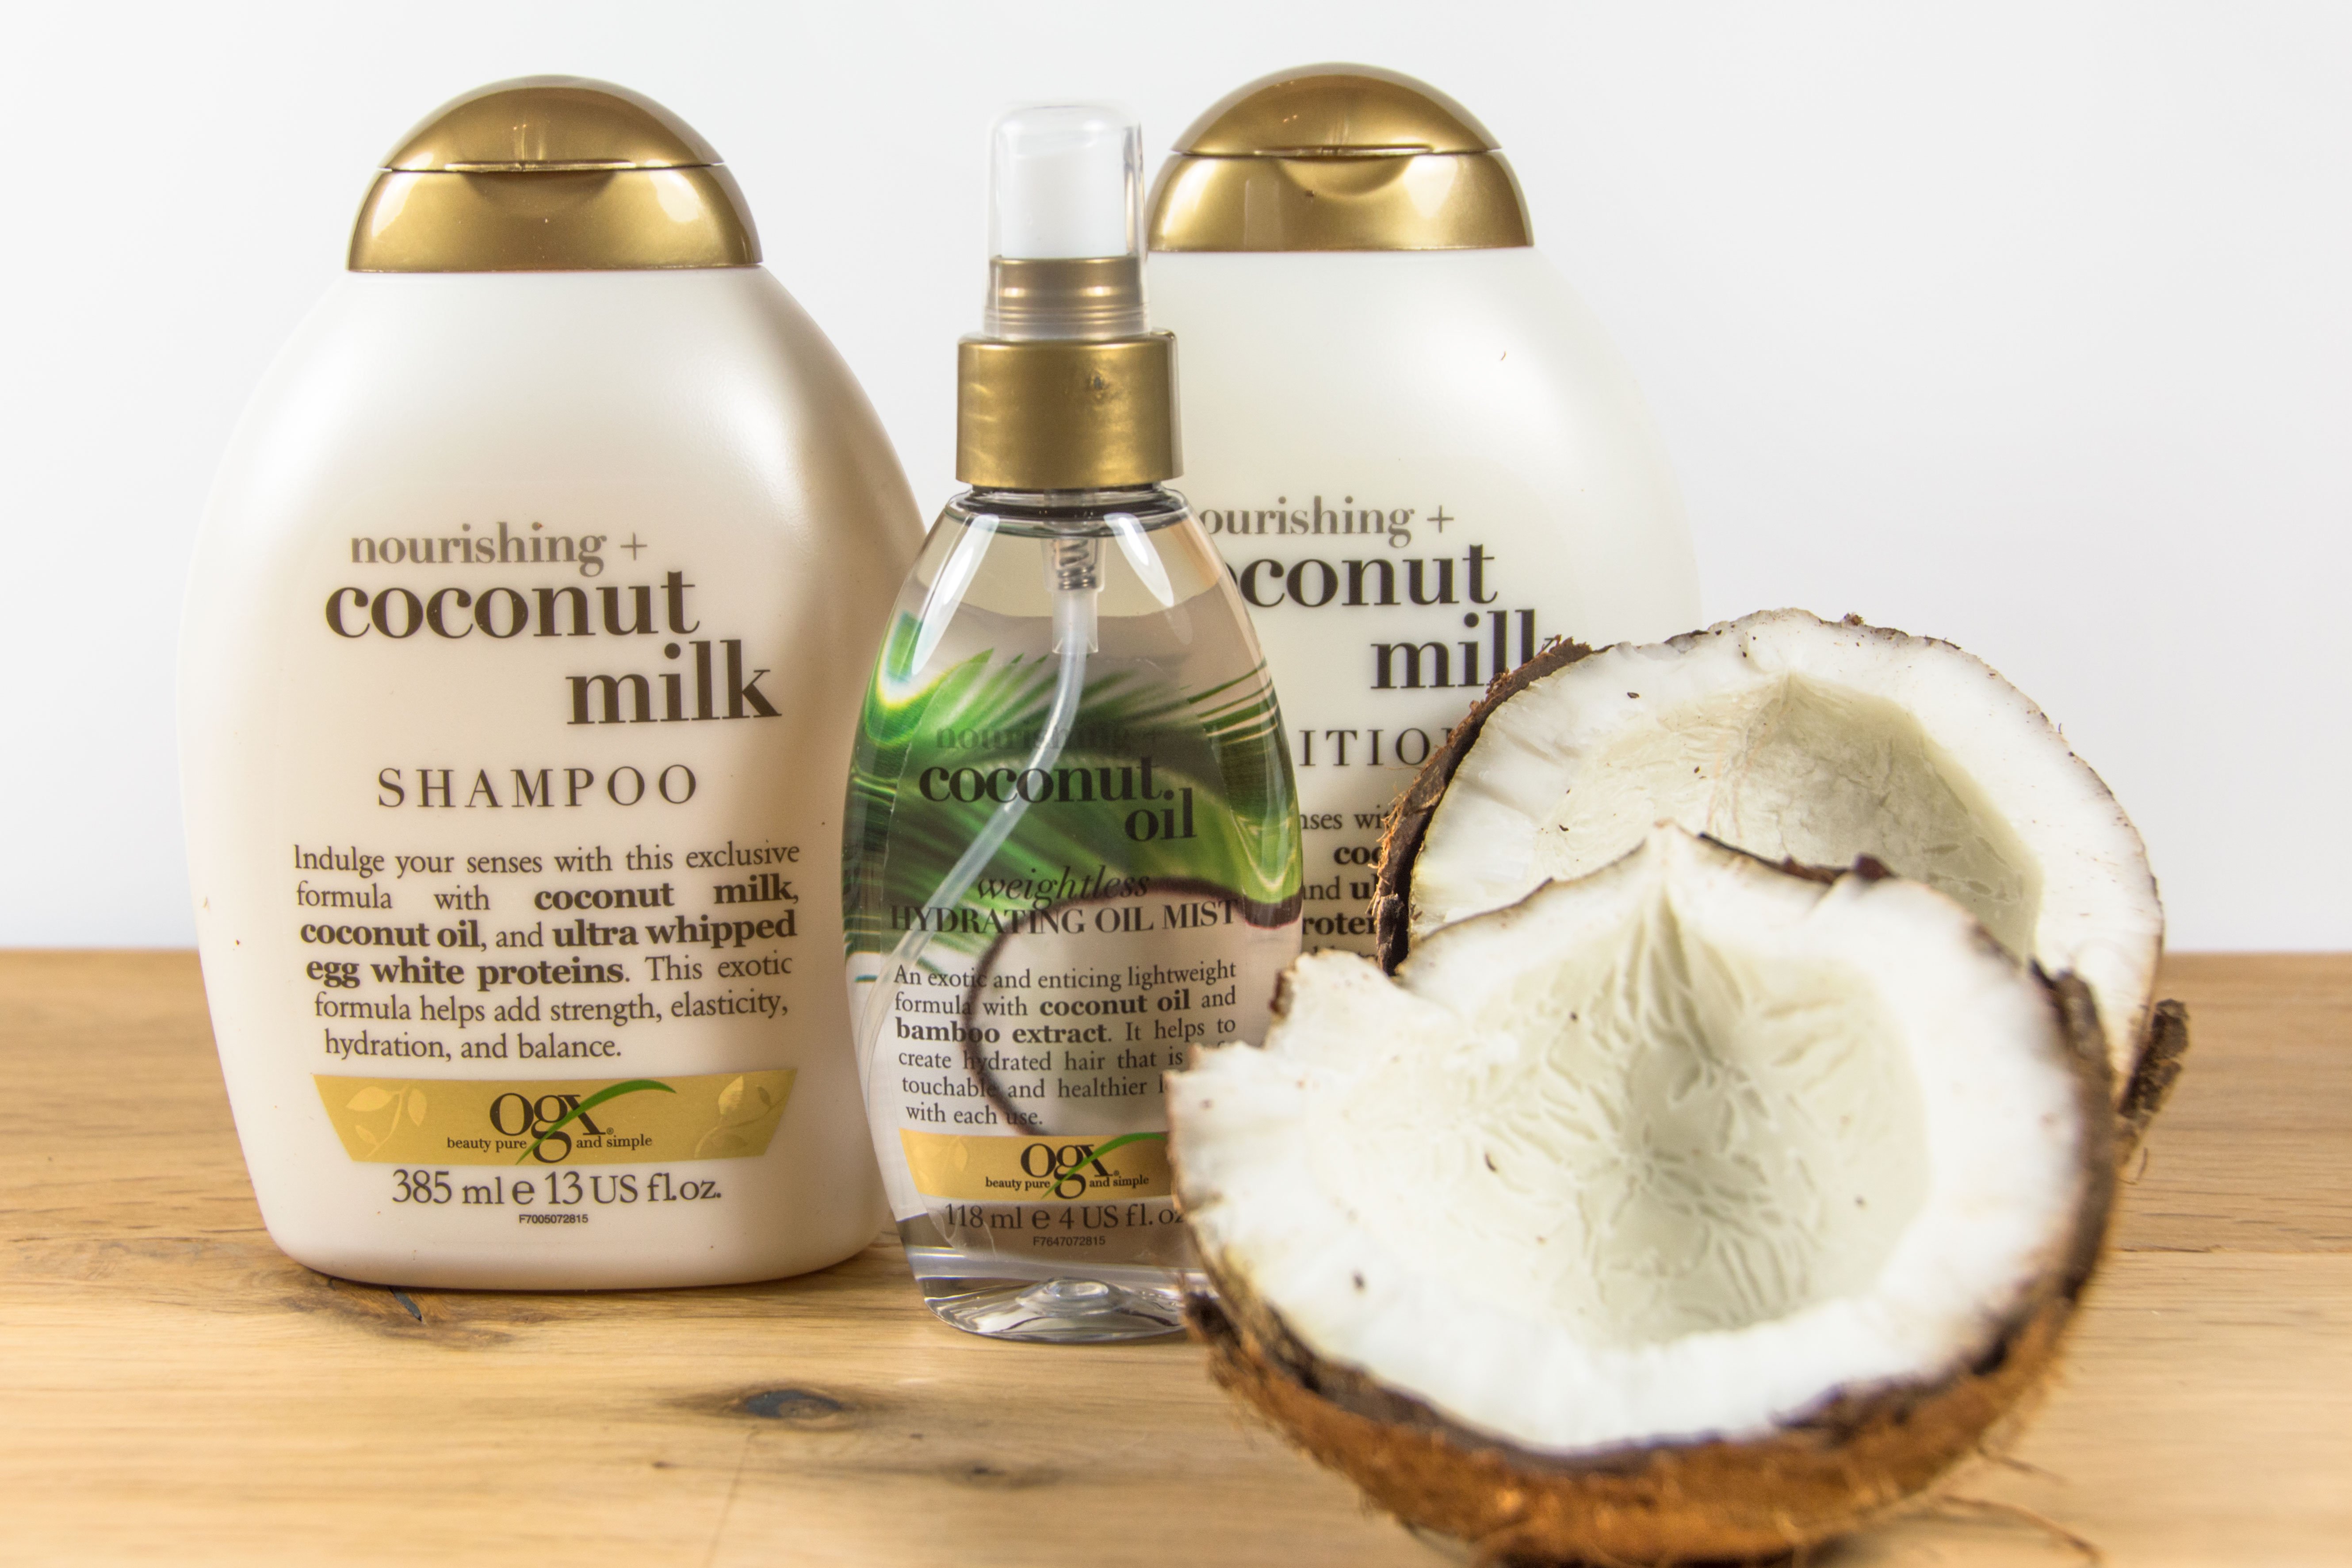 Ogx coconut milk 720 p